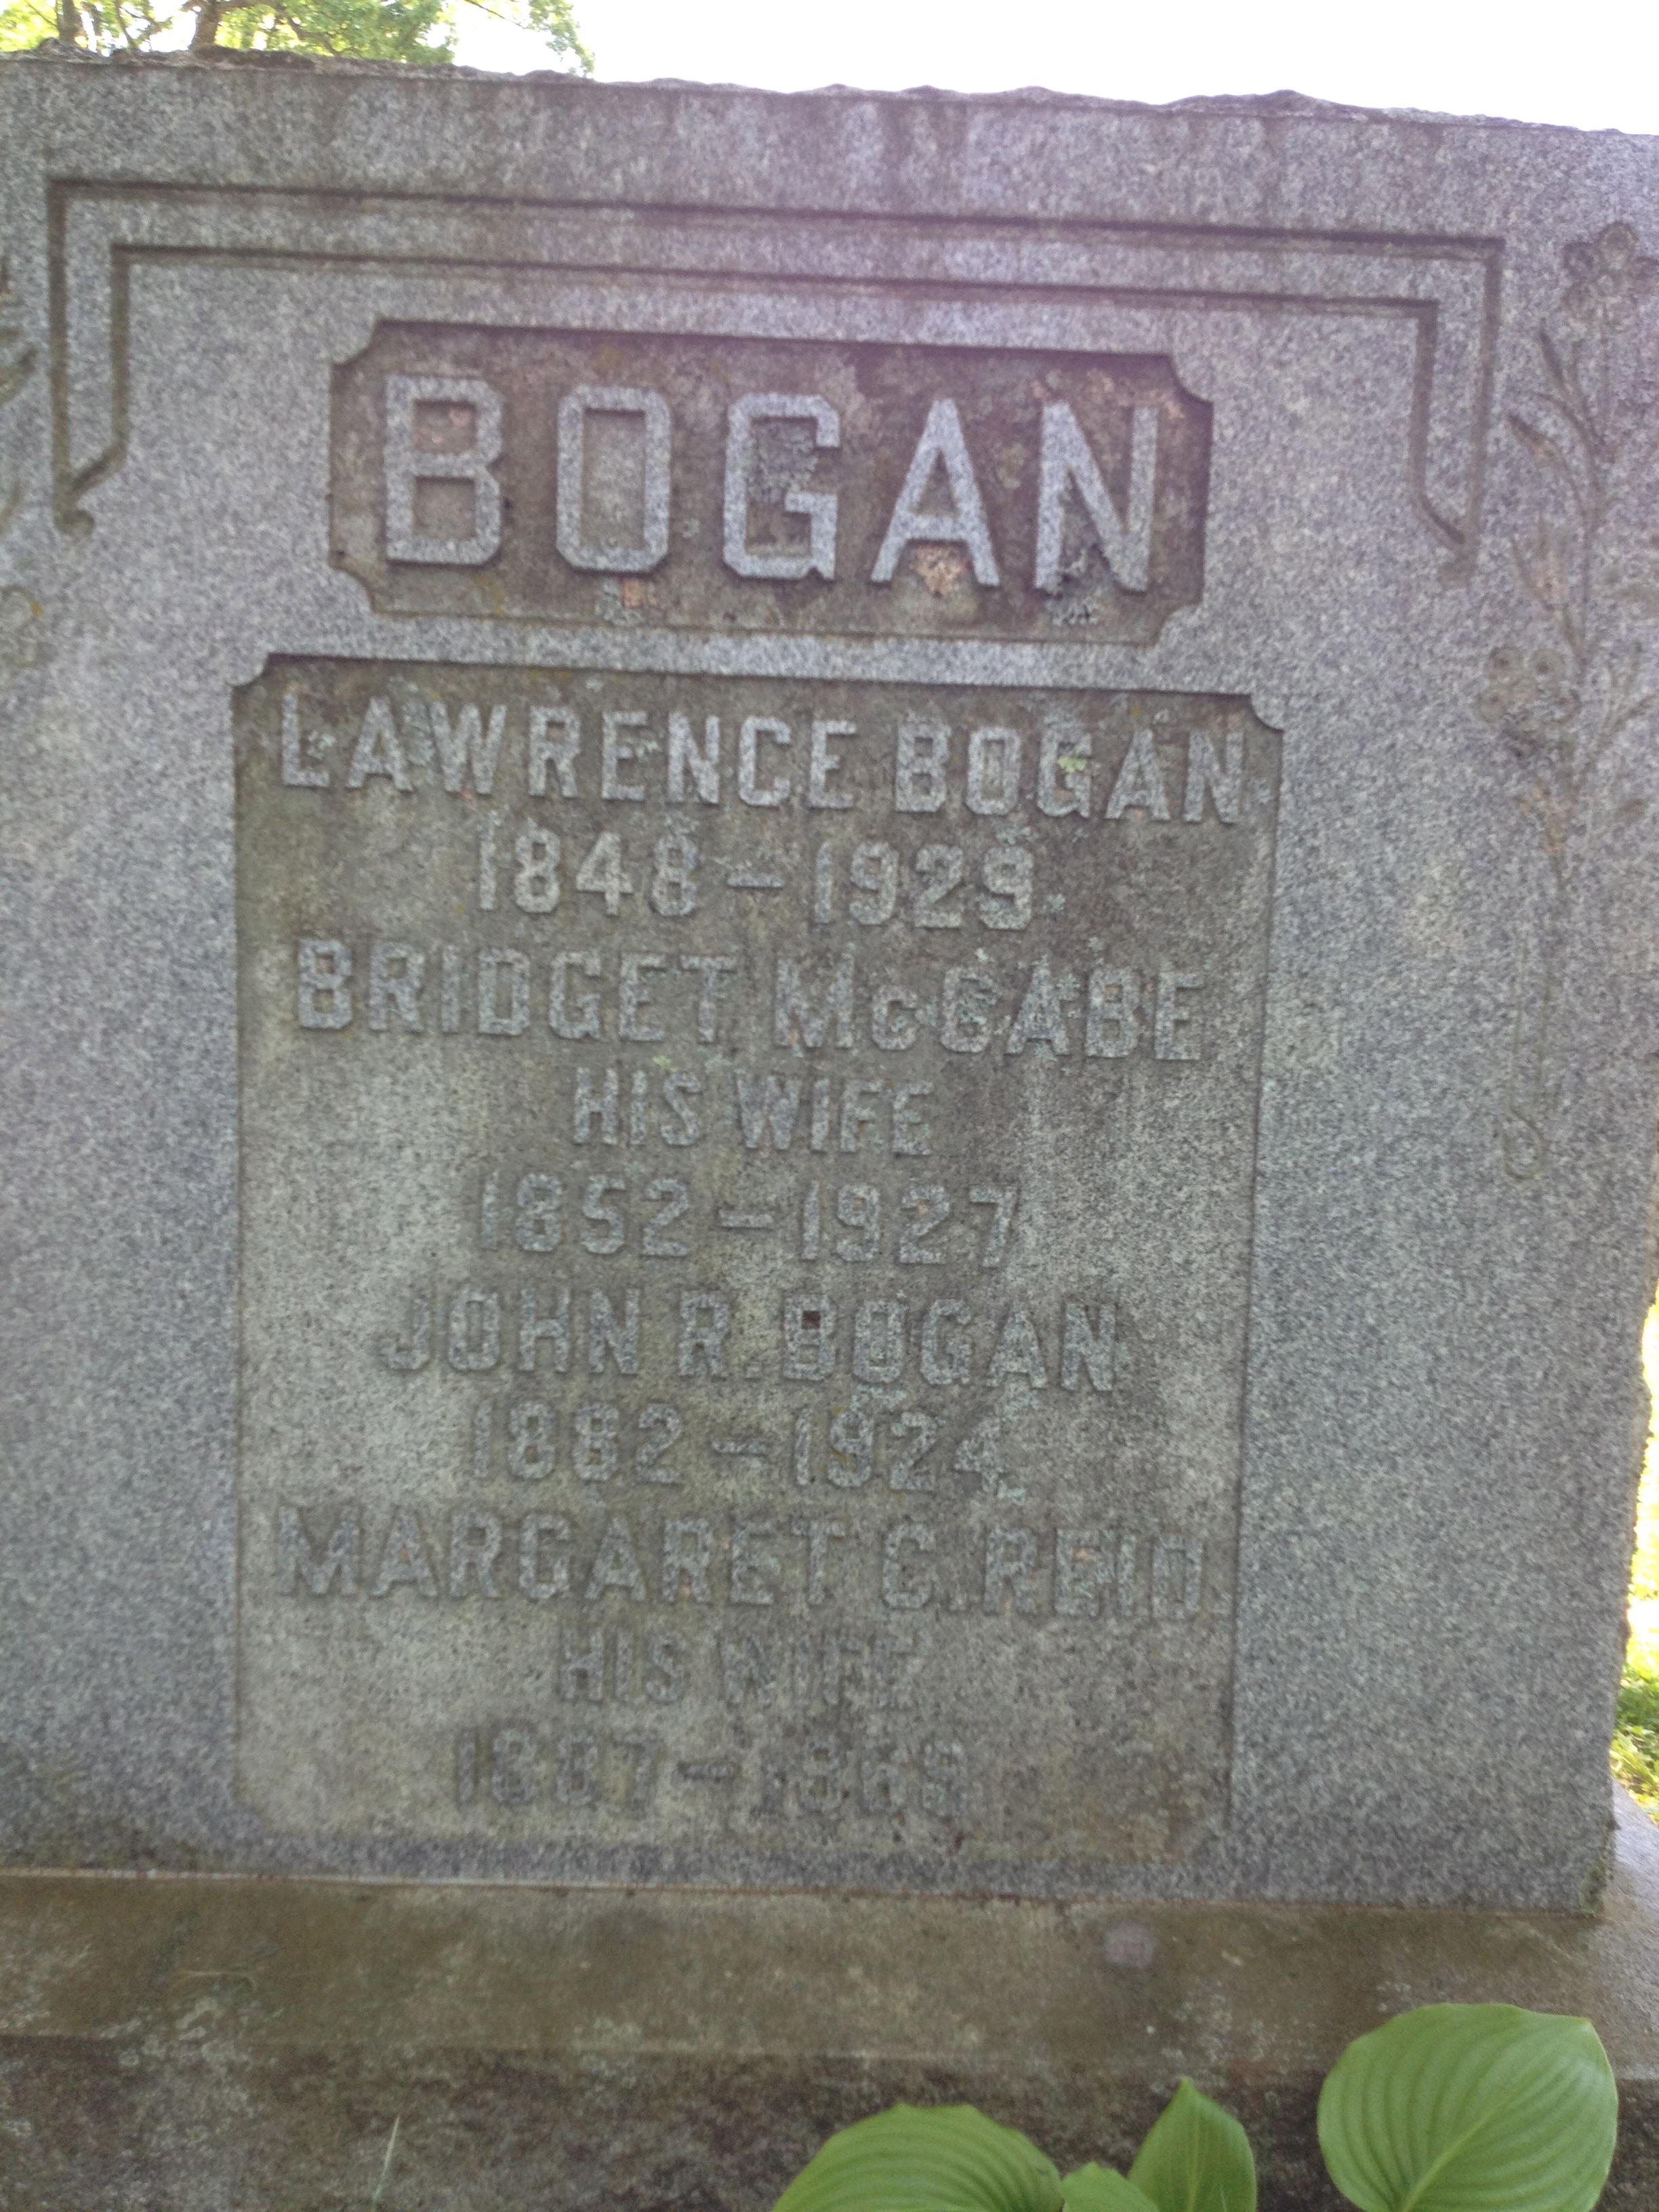 Headstone of Lawrence Bogan and Bridget McCabe 